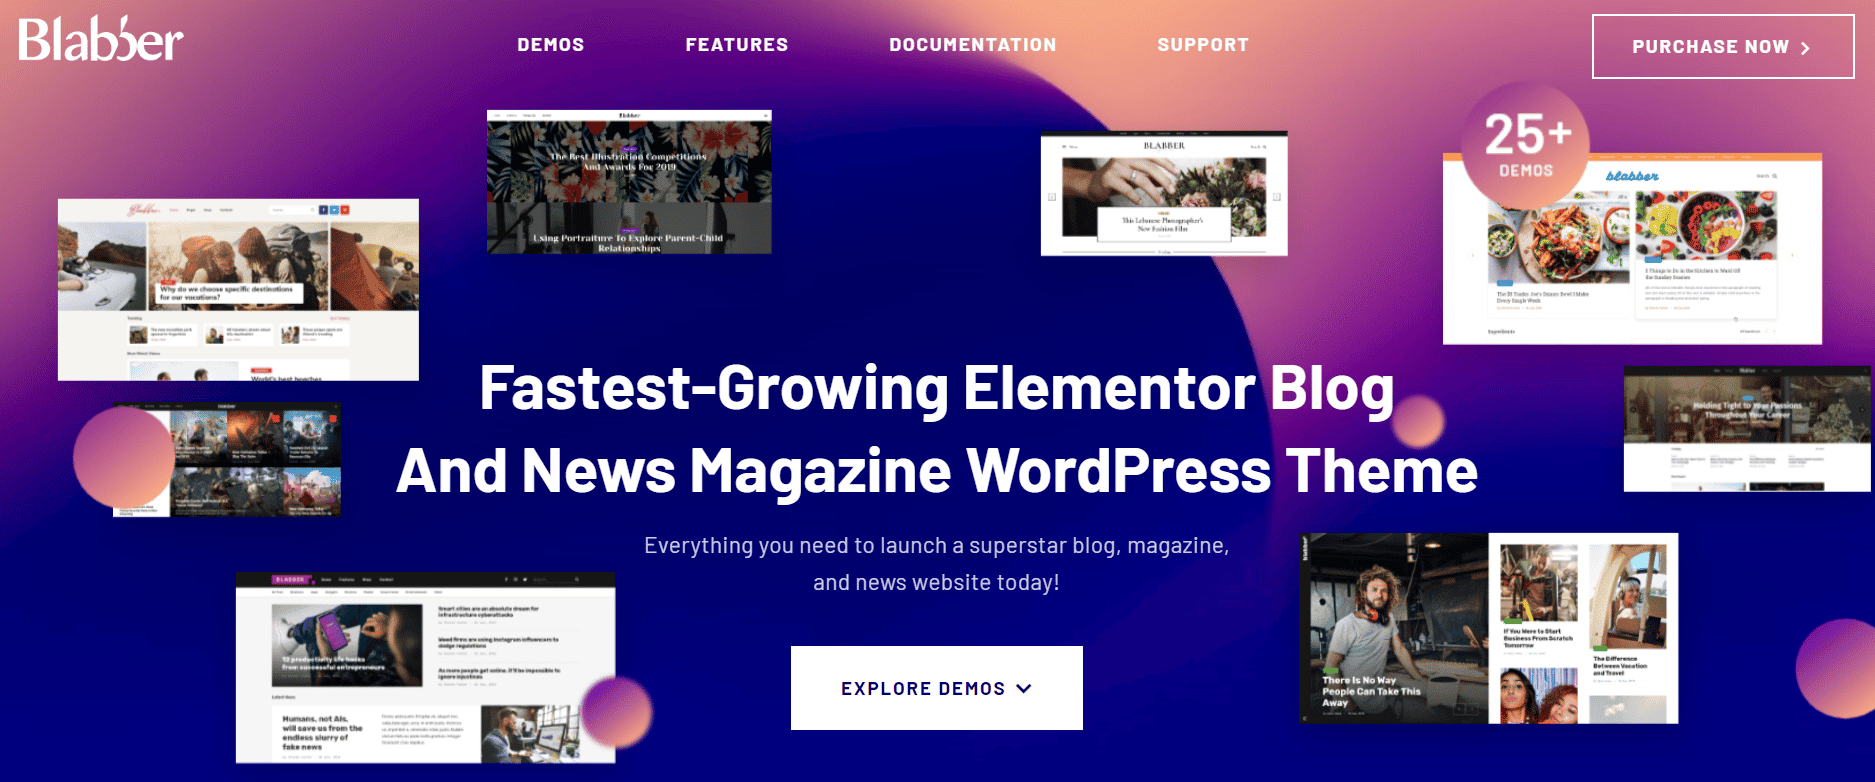 Screenshot of the website for the Blabber WordPress theme for affiliates.